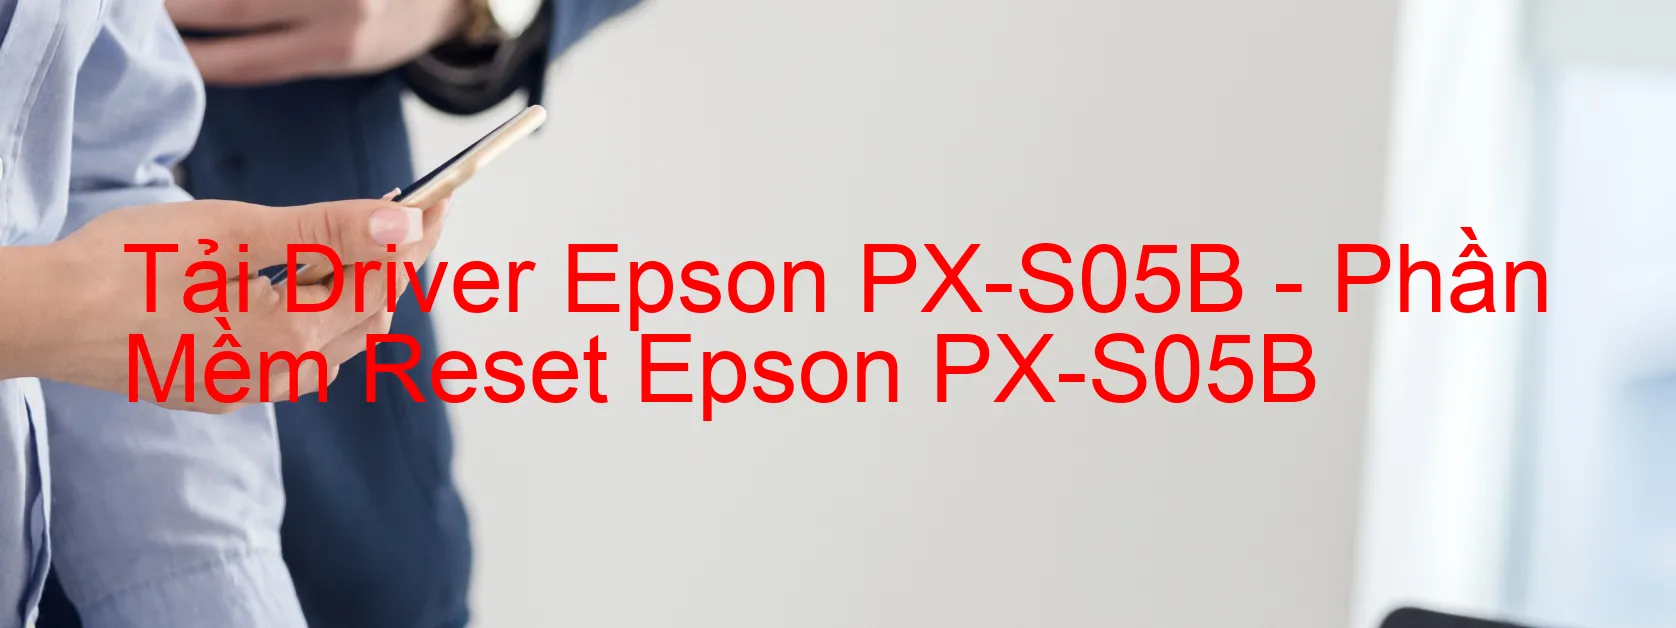 Driver Epson PX-S05B, Phần Mềm Reset Epson PX-S05B